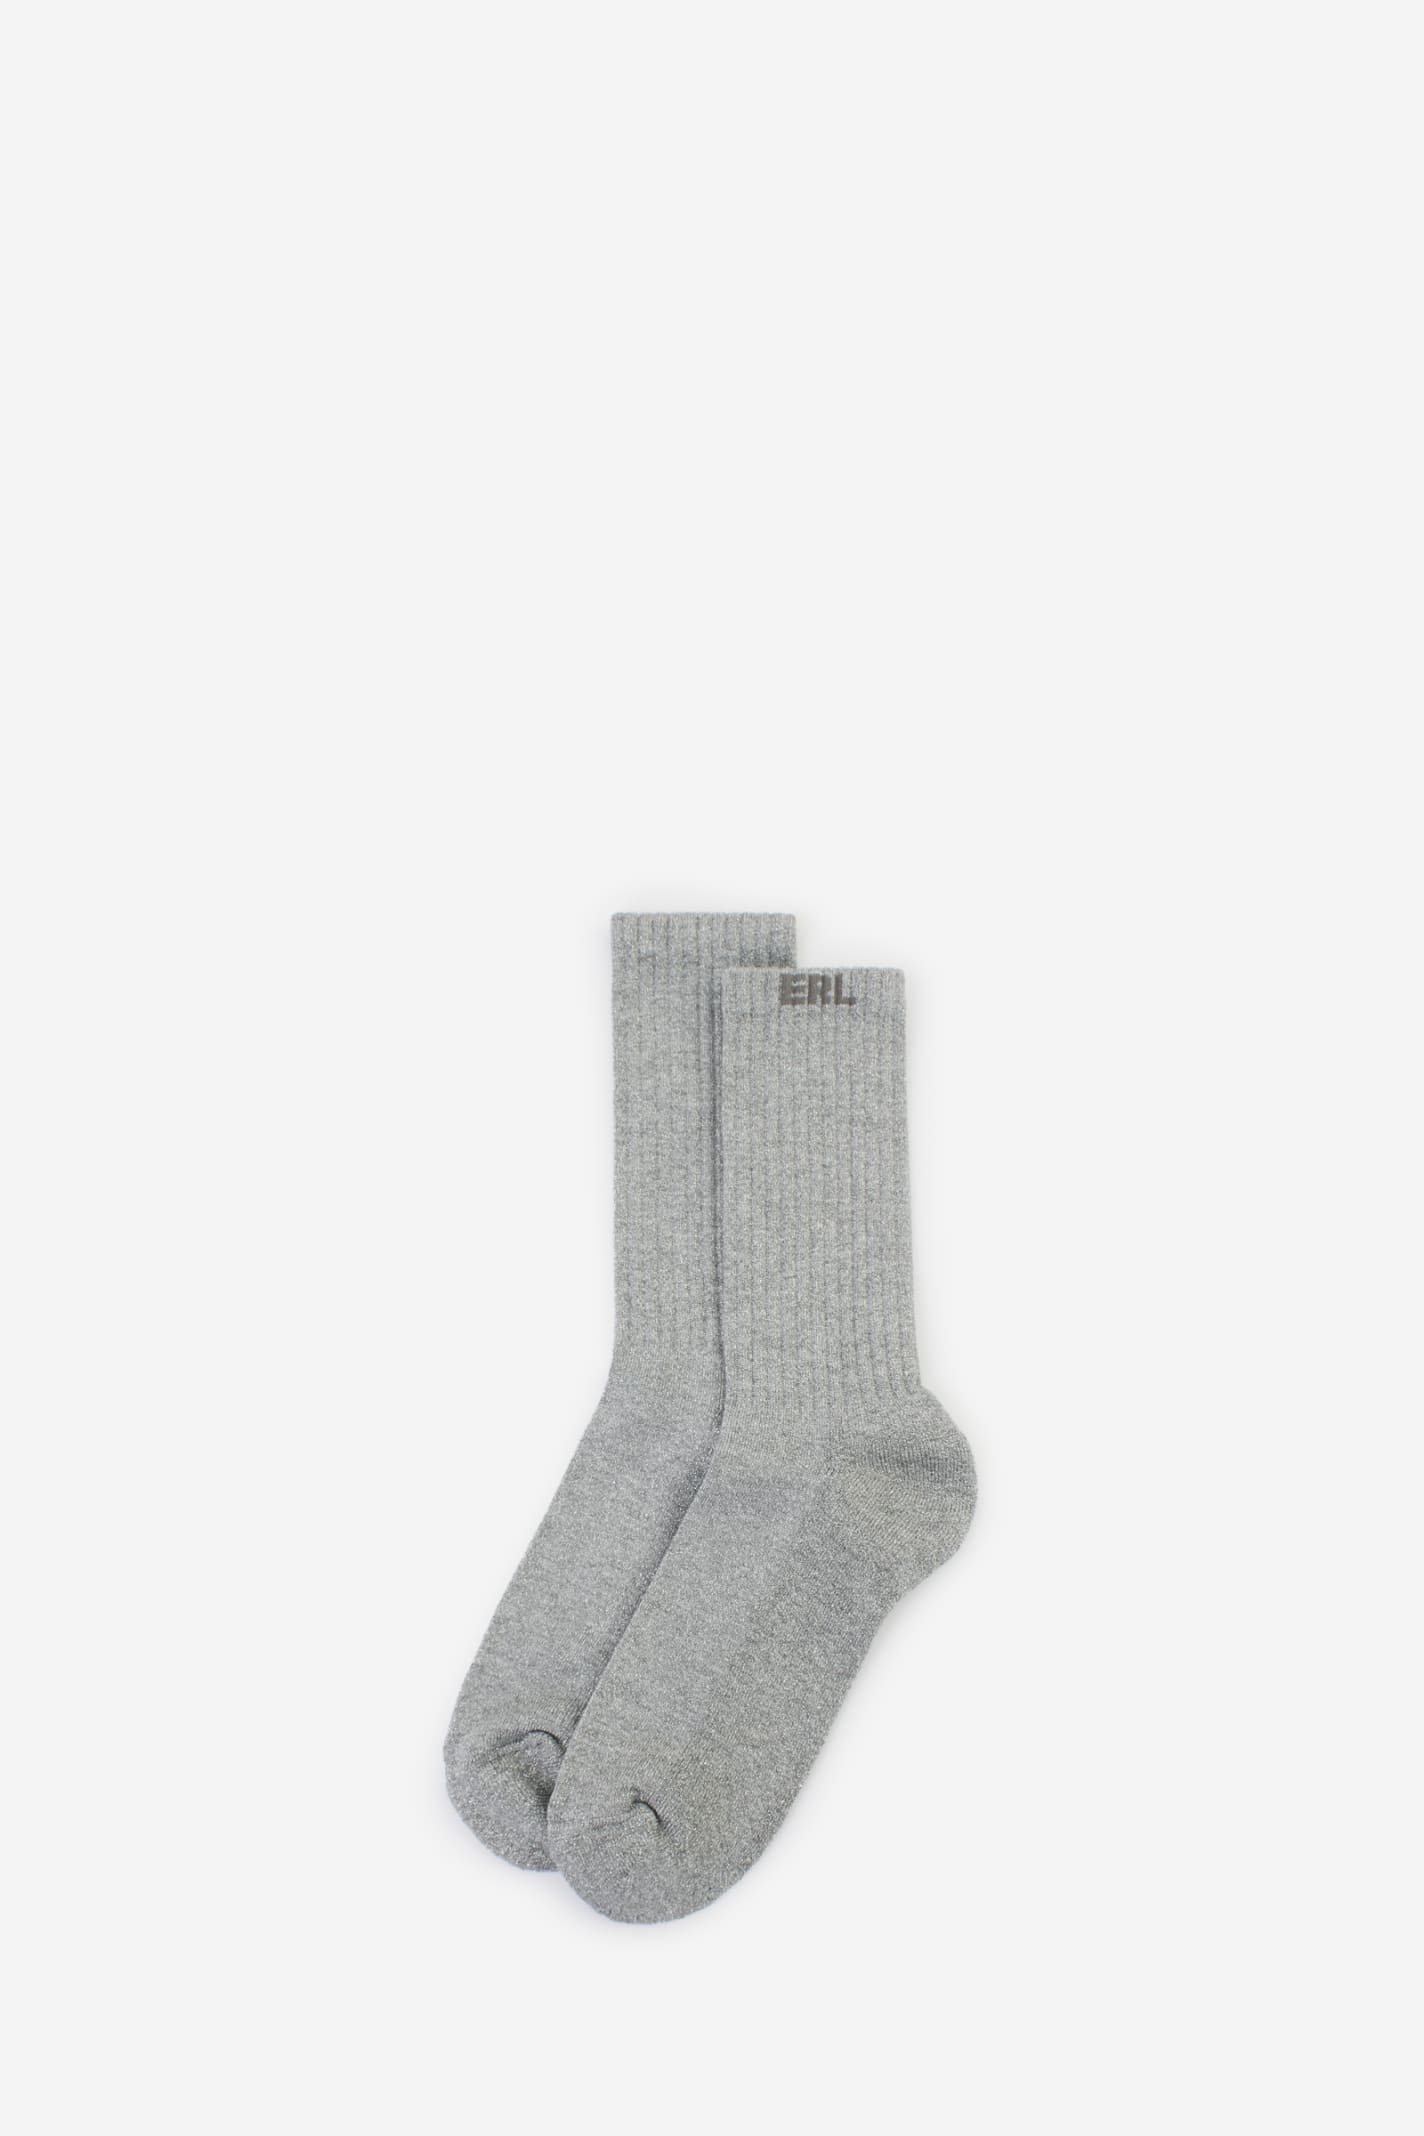 Lurex Erl Socks Socks